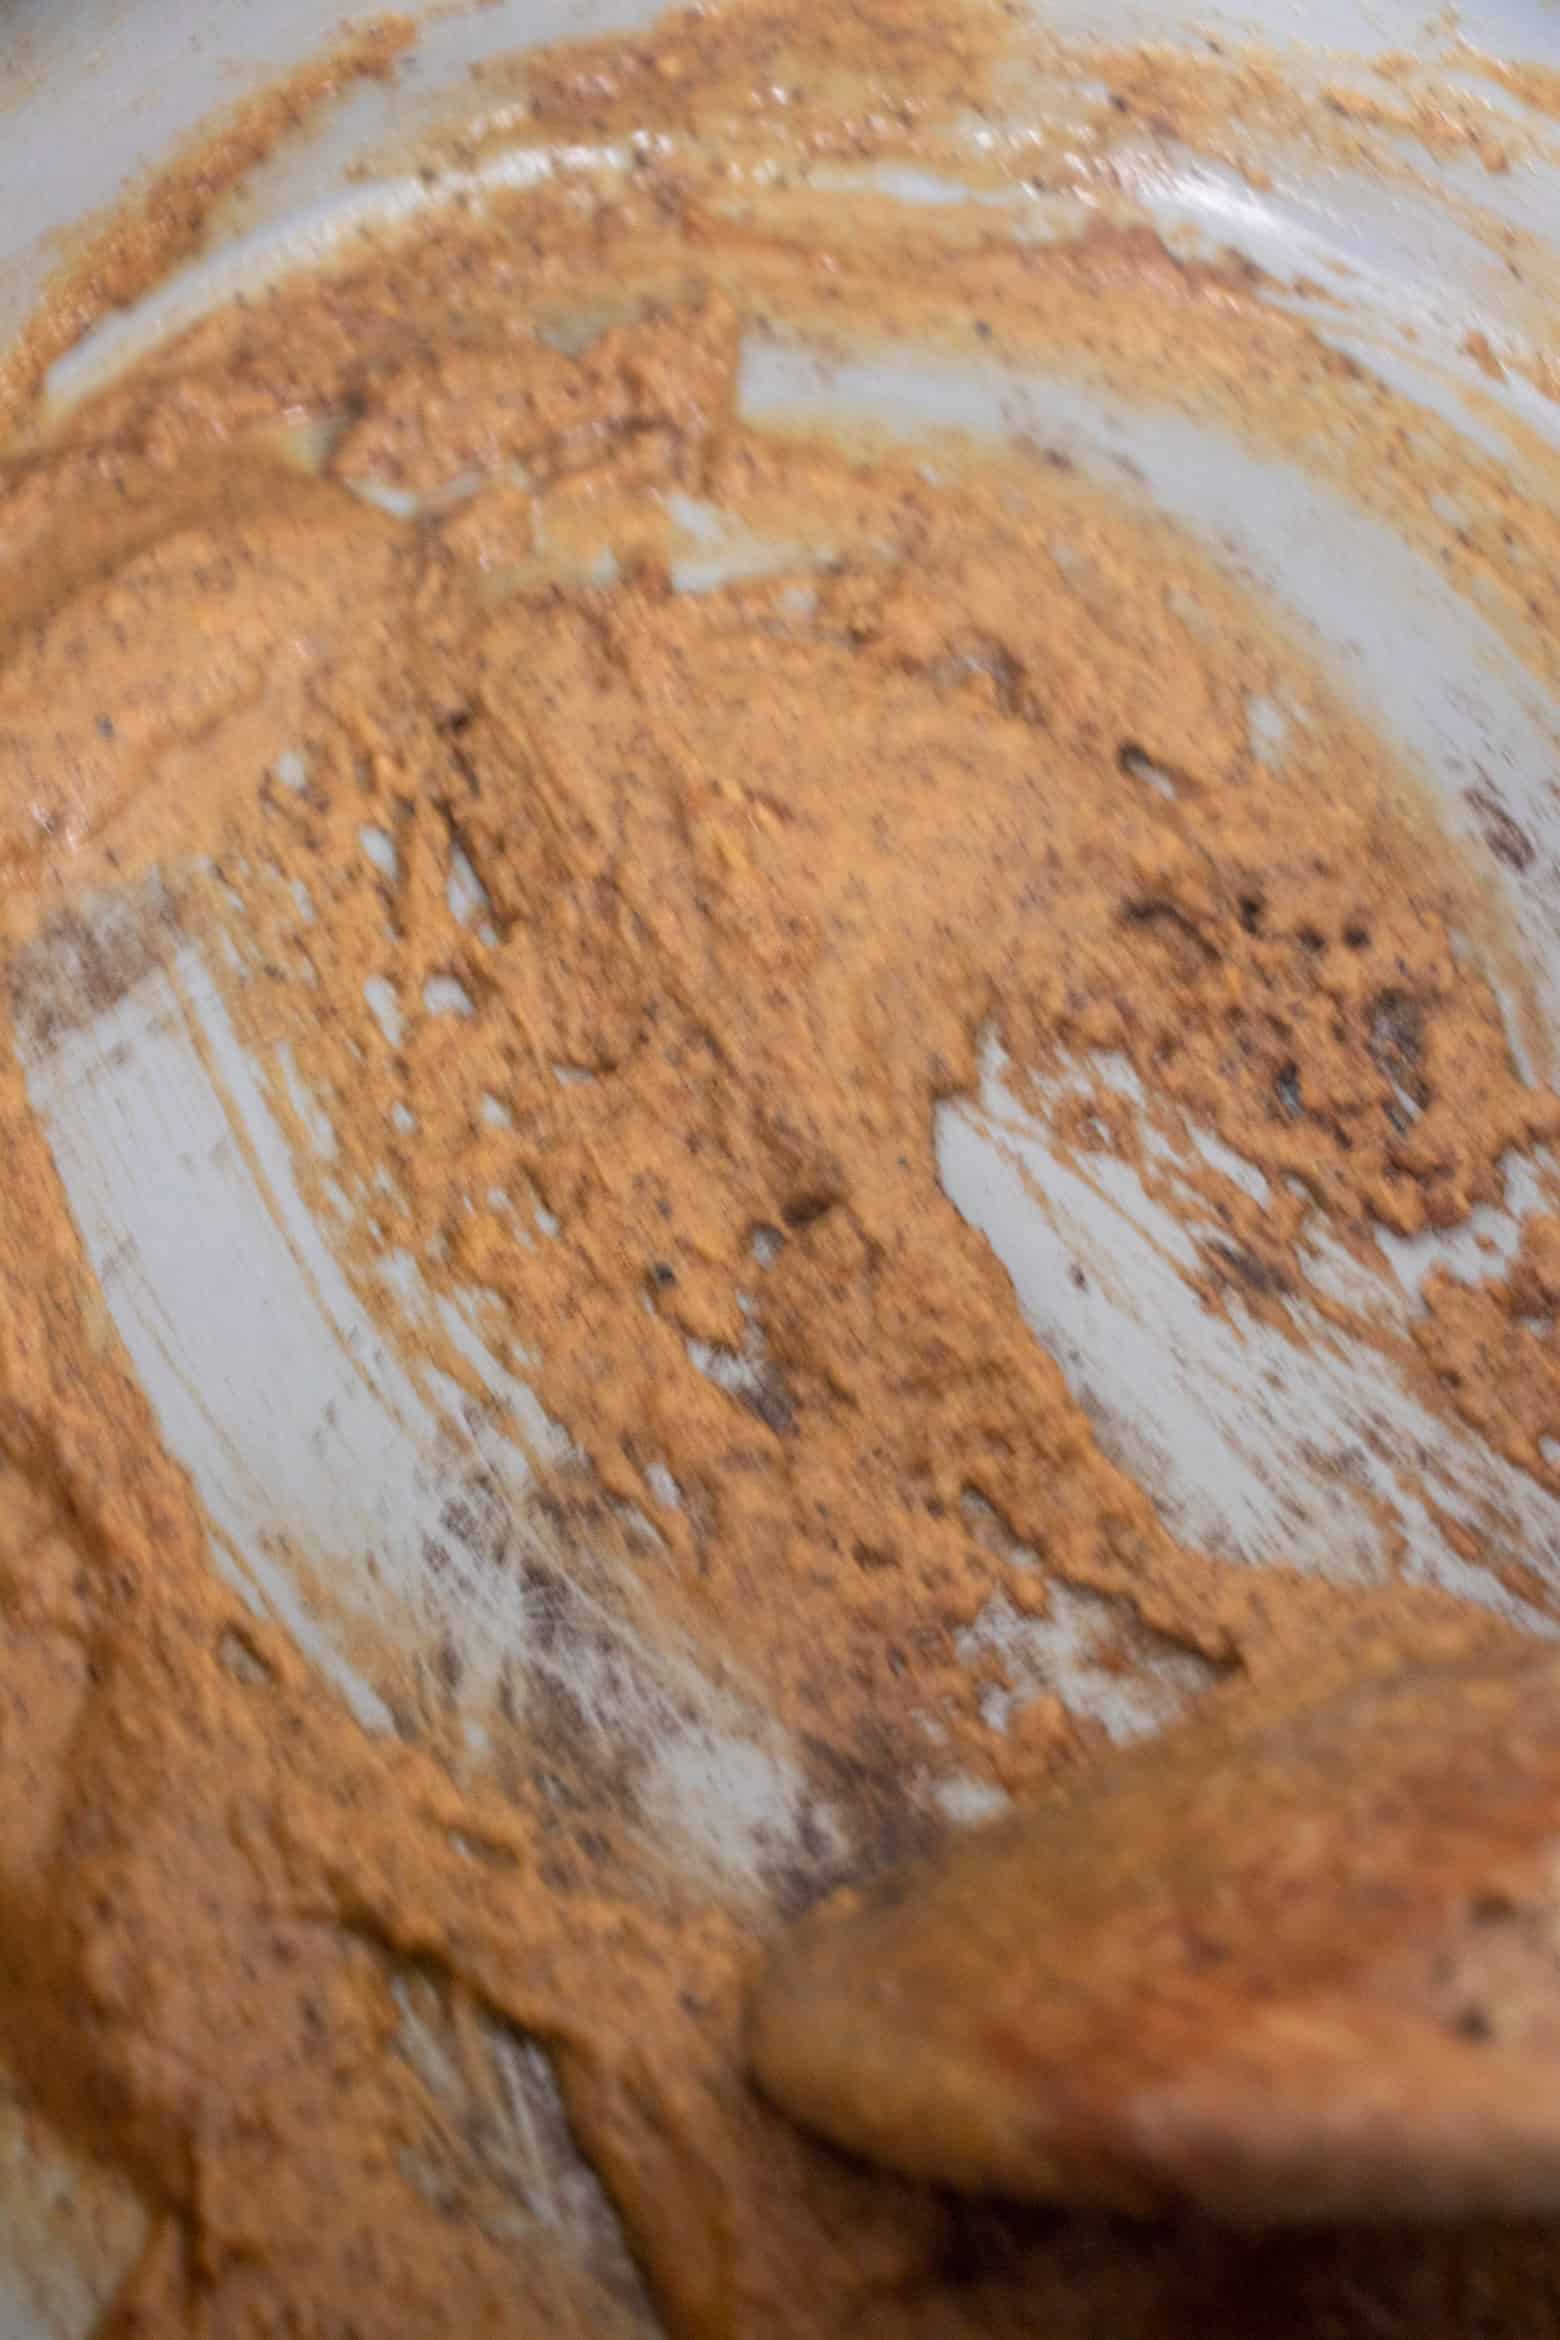 Peanut butter roux in a pot.